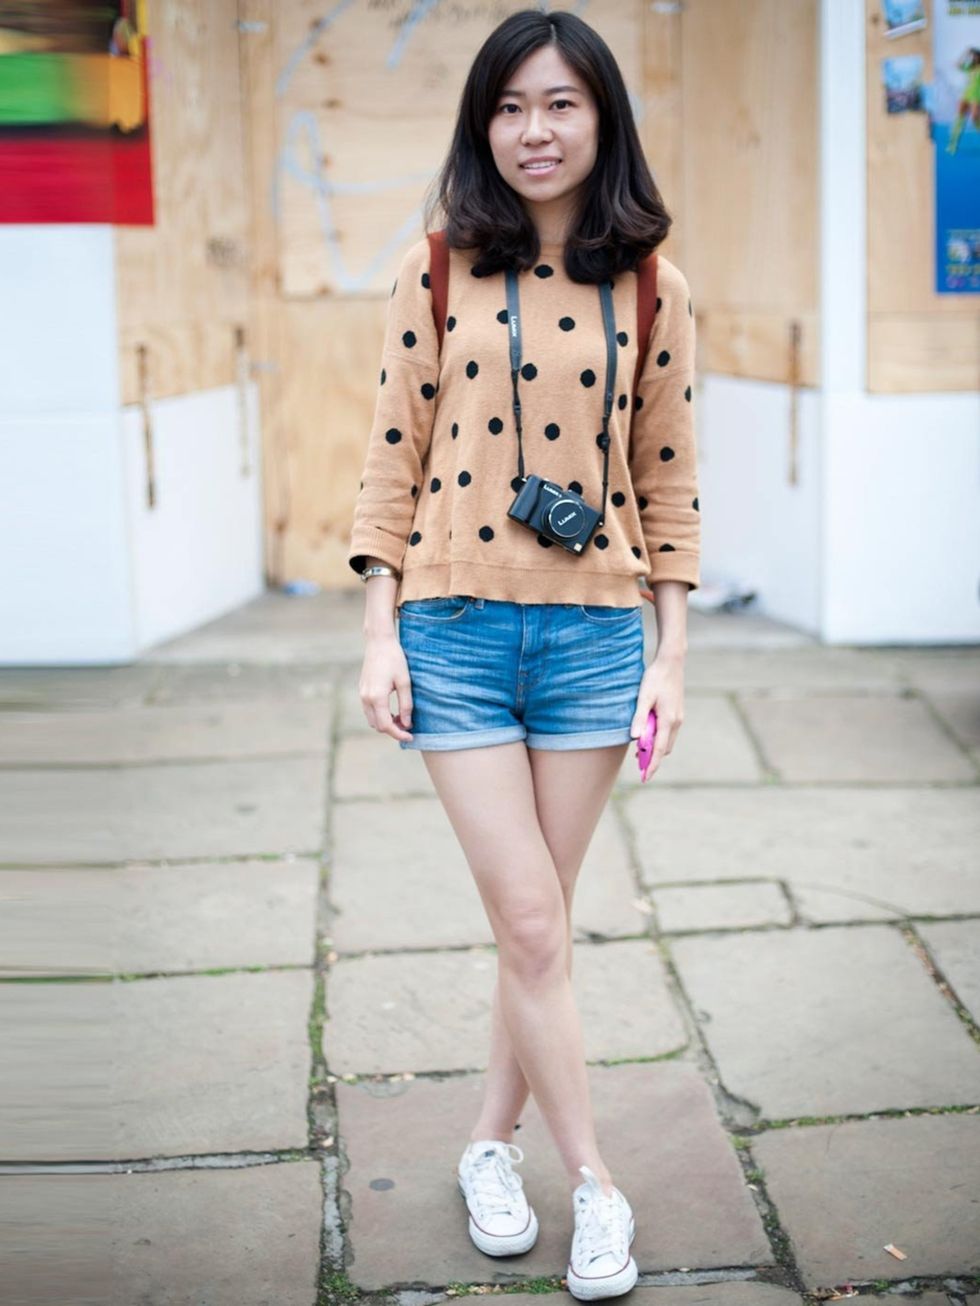 <p>Zhen, 22. Primark top, Zara shorts, Converse trainers, Longchamp bag.</p>